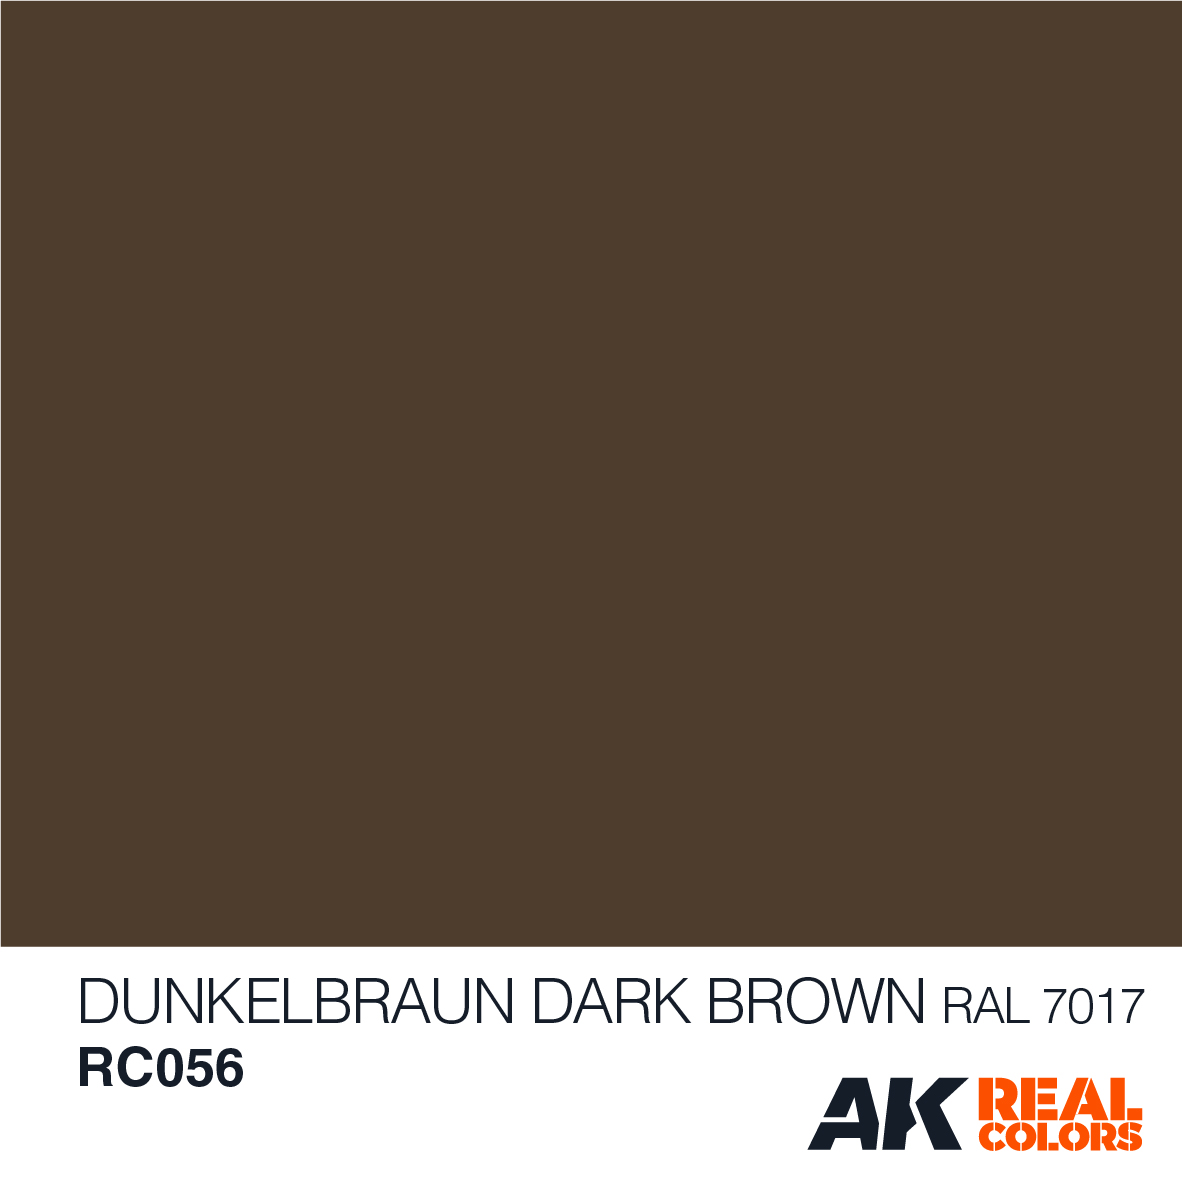 Dunkelbraun – Dark Brown RAL 7017